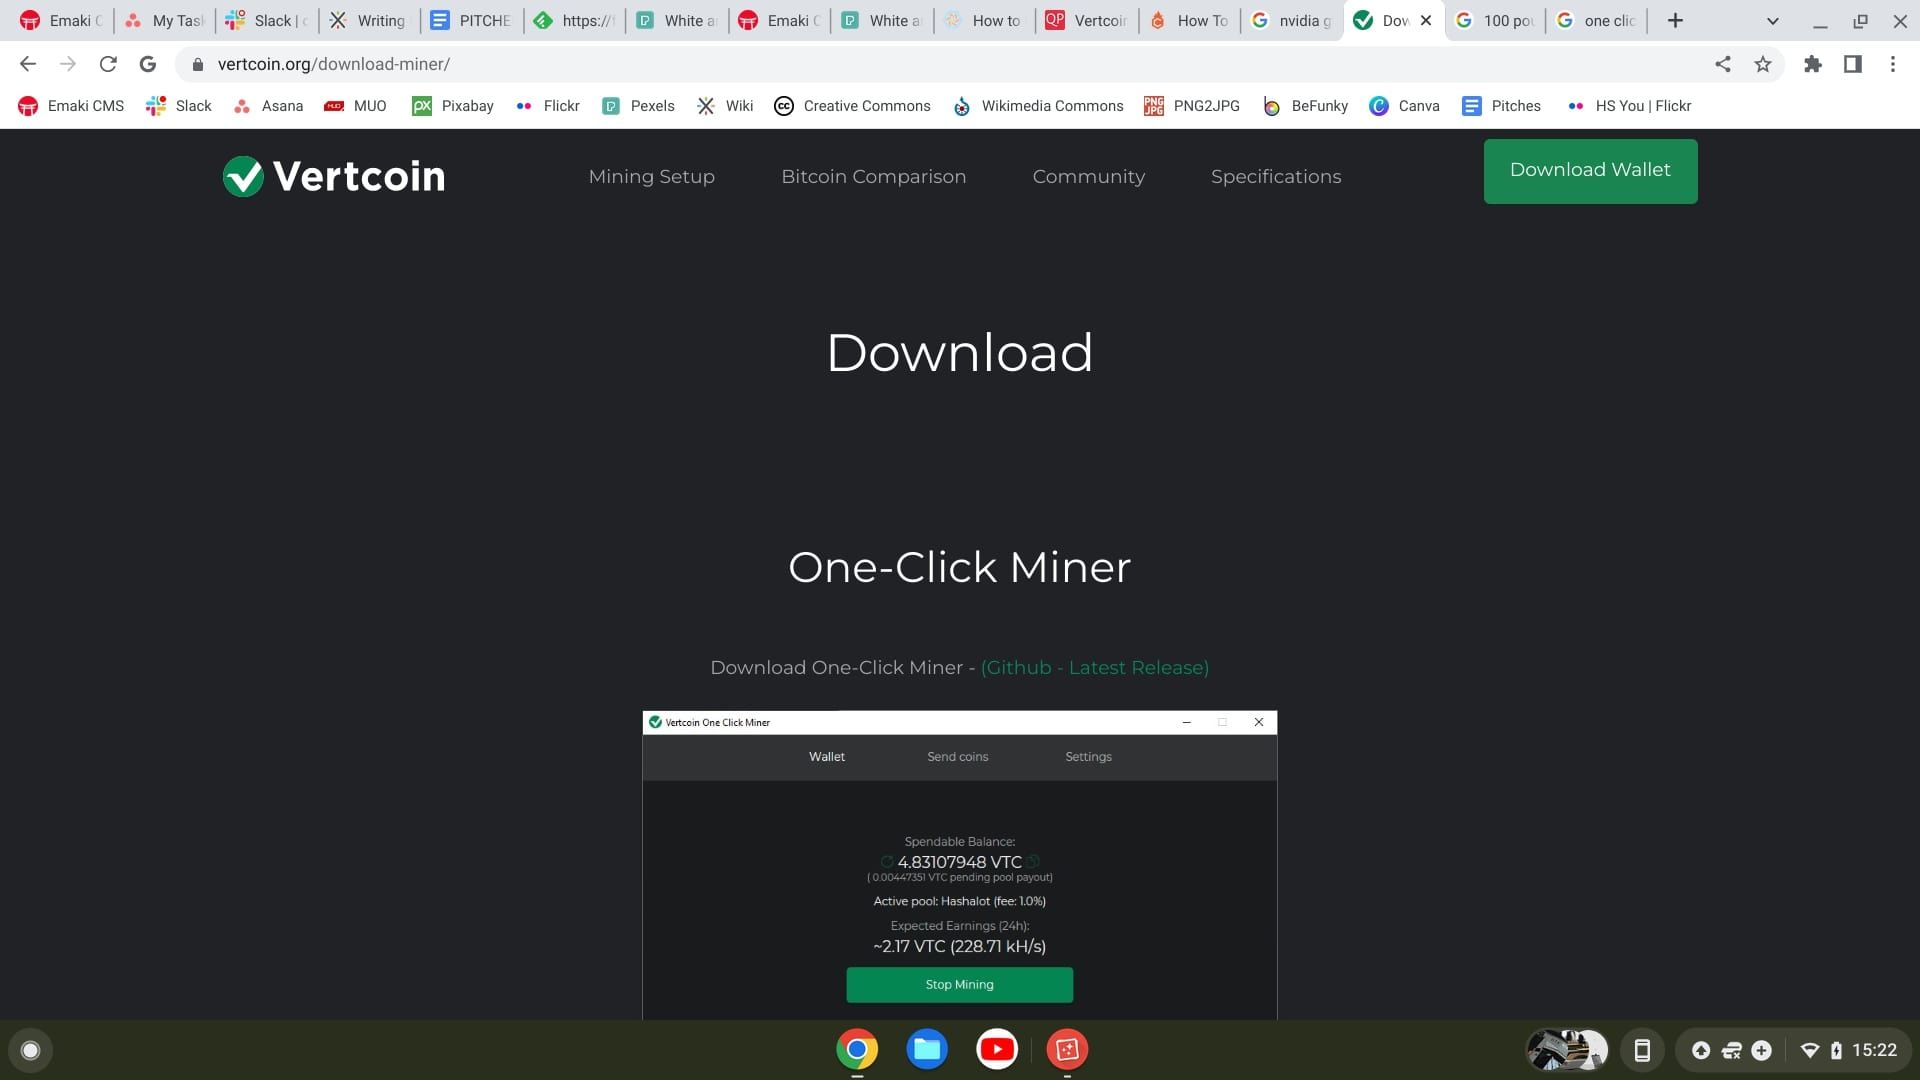 vertcoin mining software download page screenshot